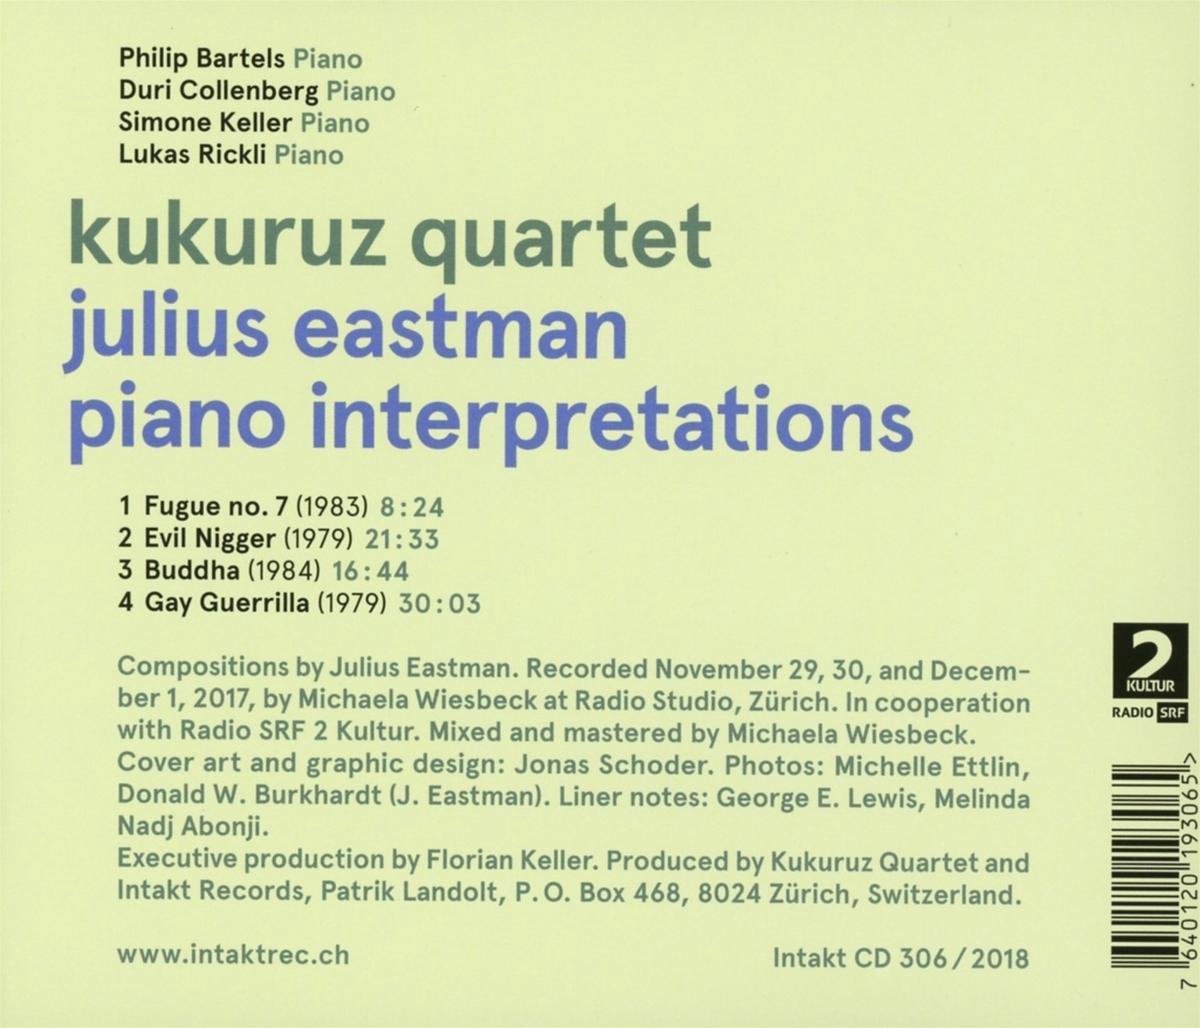 Collenberg/ Bartels/ Keller/ Rickli/ Eastman: Piano Interpretations - slide-1